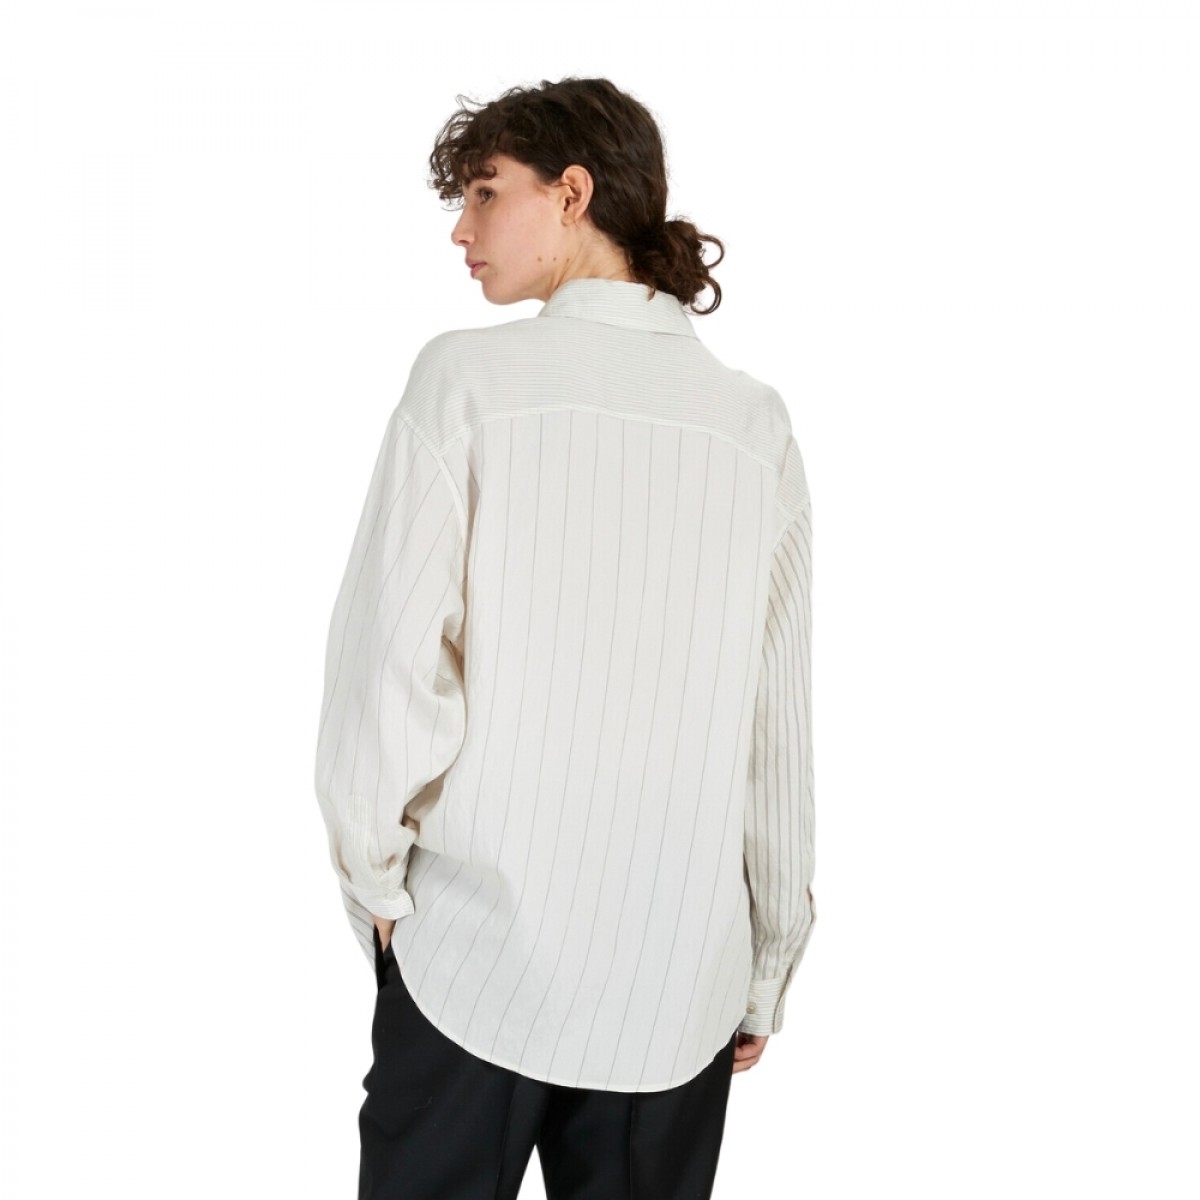 shirt graziella filoro - off white - ryggen